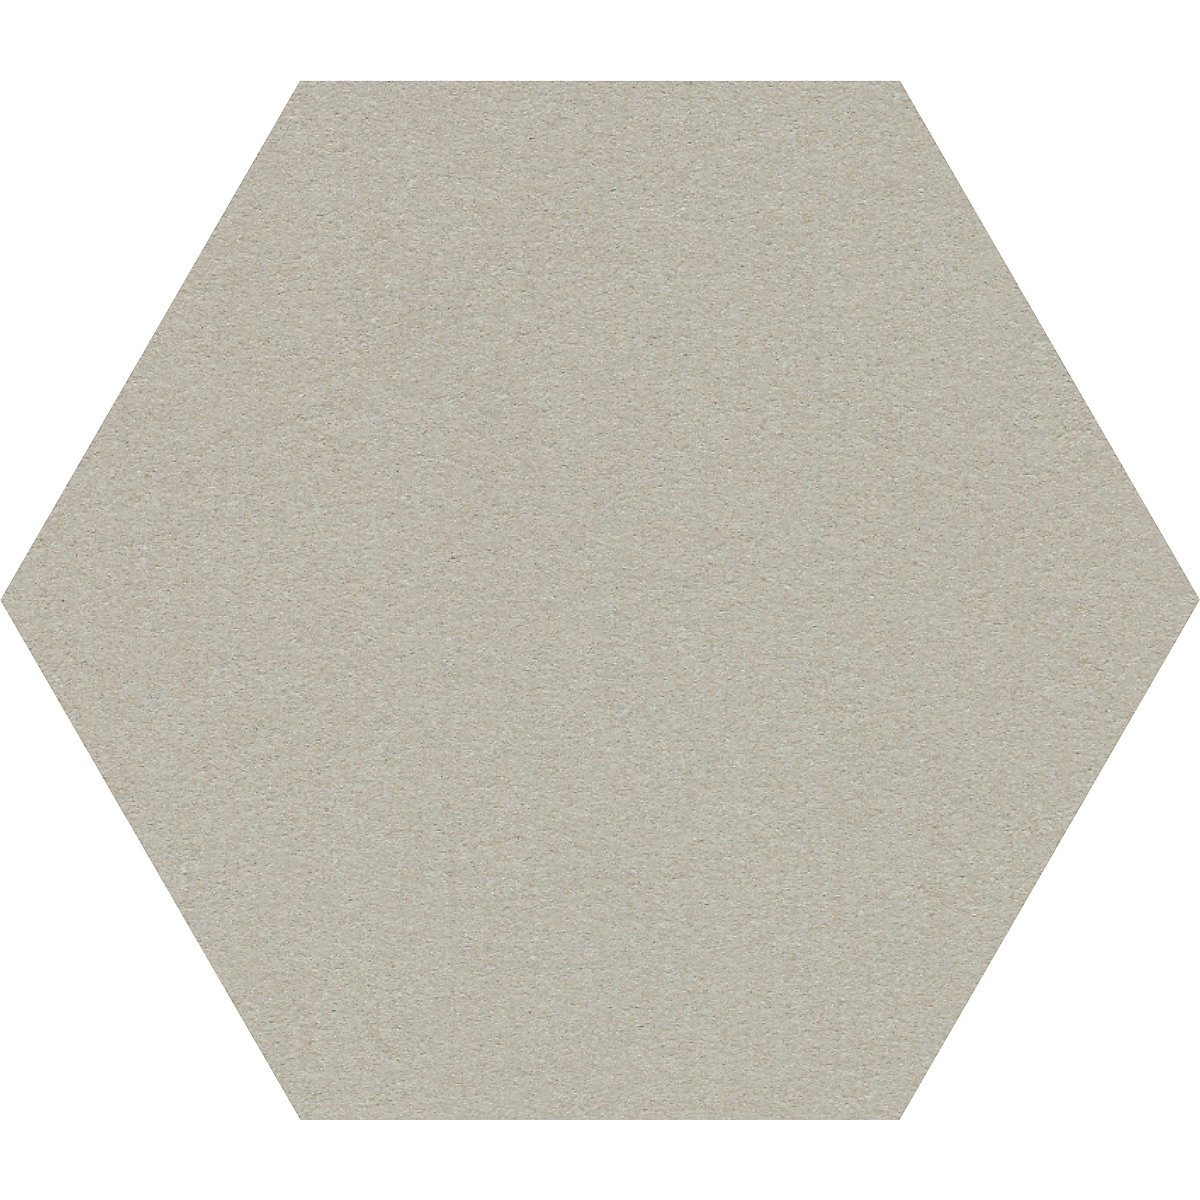 Design prikbord zeshoekig – Chameleon, kurk, b x h = 600 x 600 mm, lichtgrijs-37